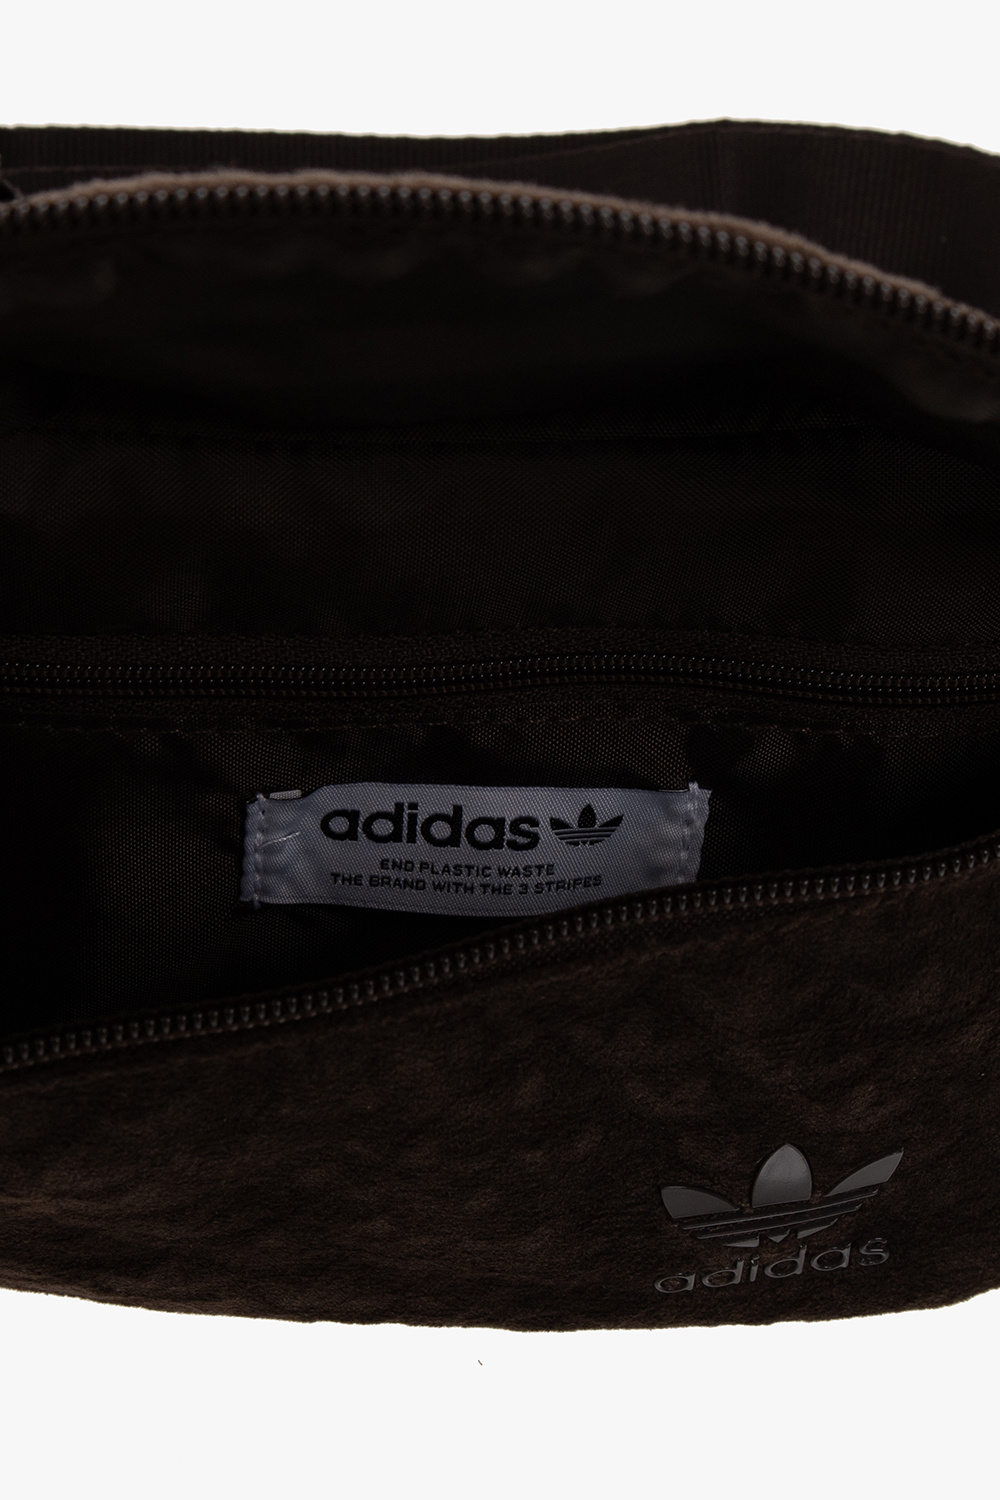 ADIDAS Originals Belt bag